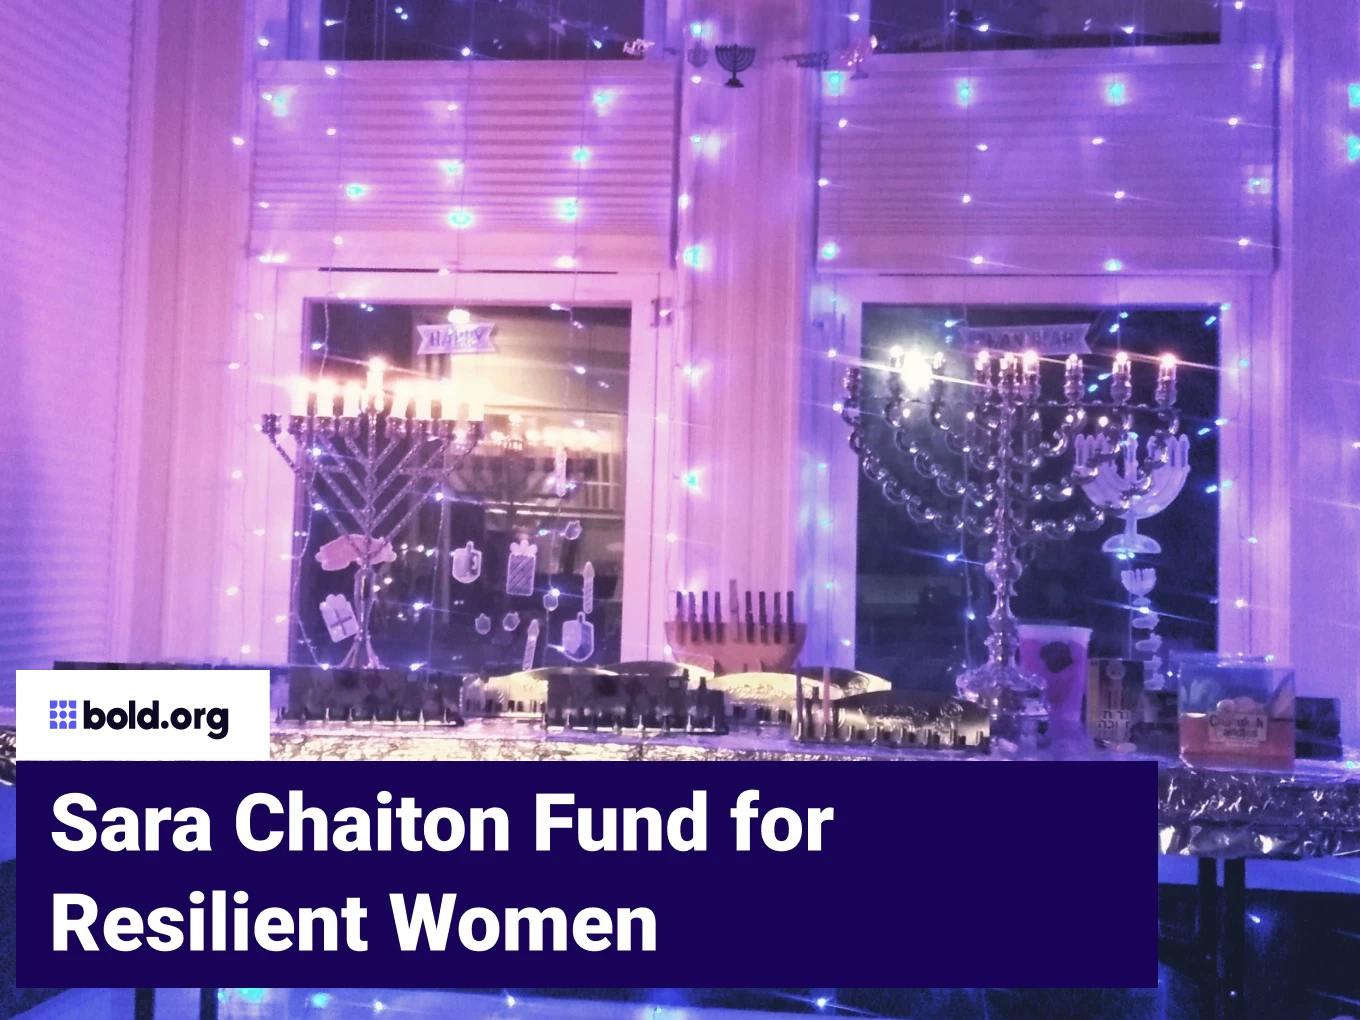 Sara Chaiton Fund for Resilient Women